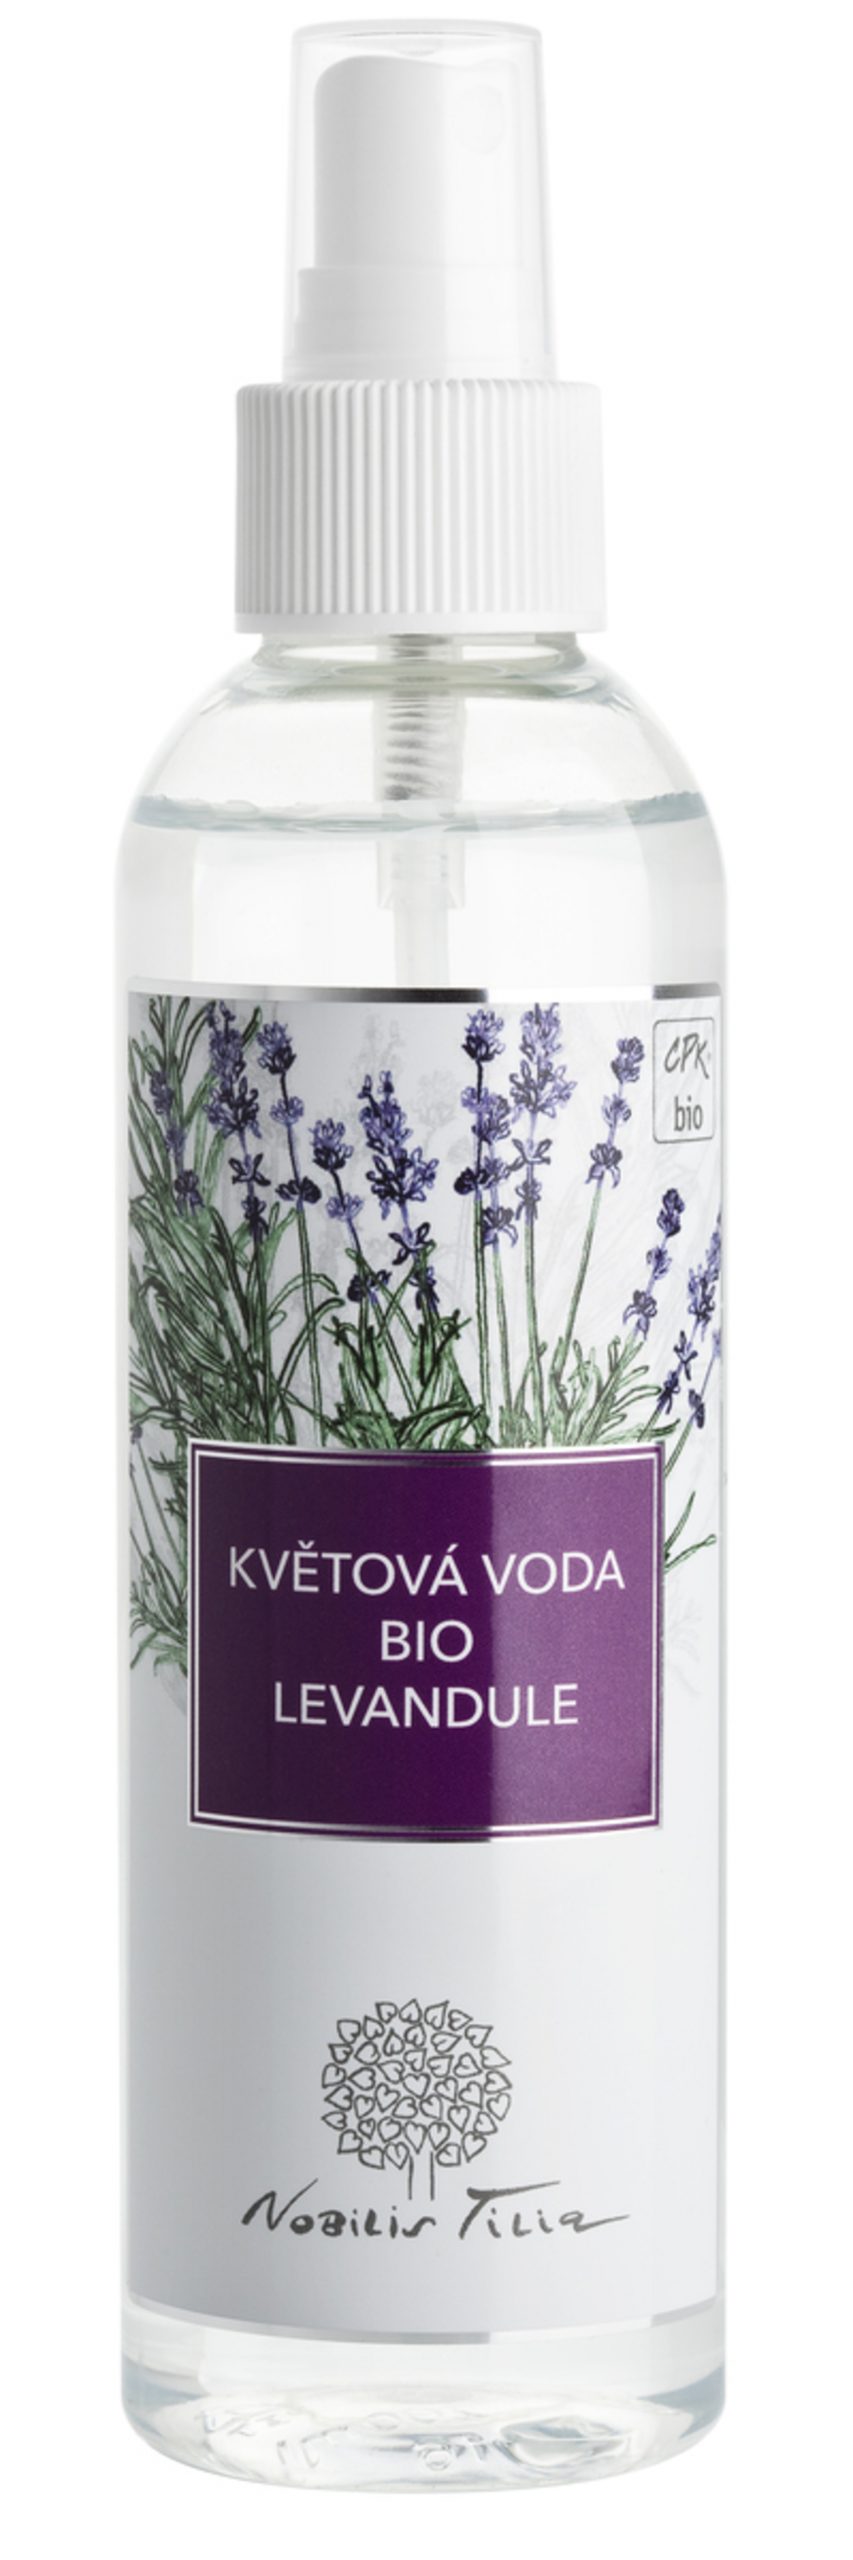 Nobilis Tilia Květová voda BIO Levandule 200 ml - expirace